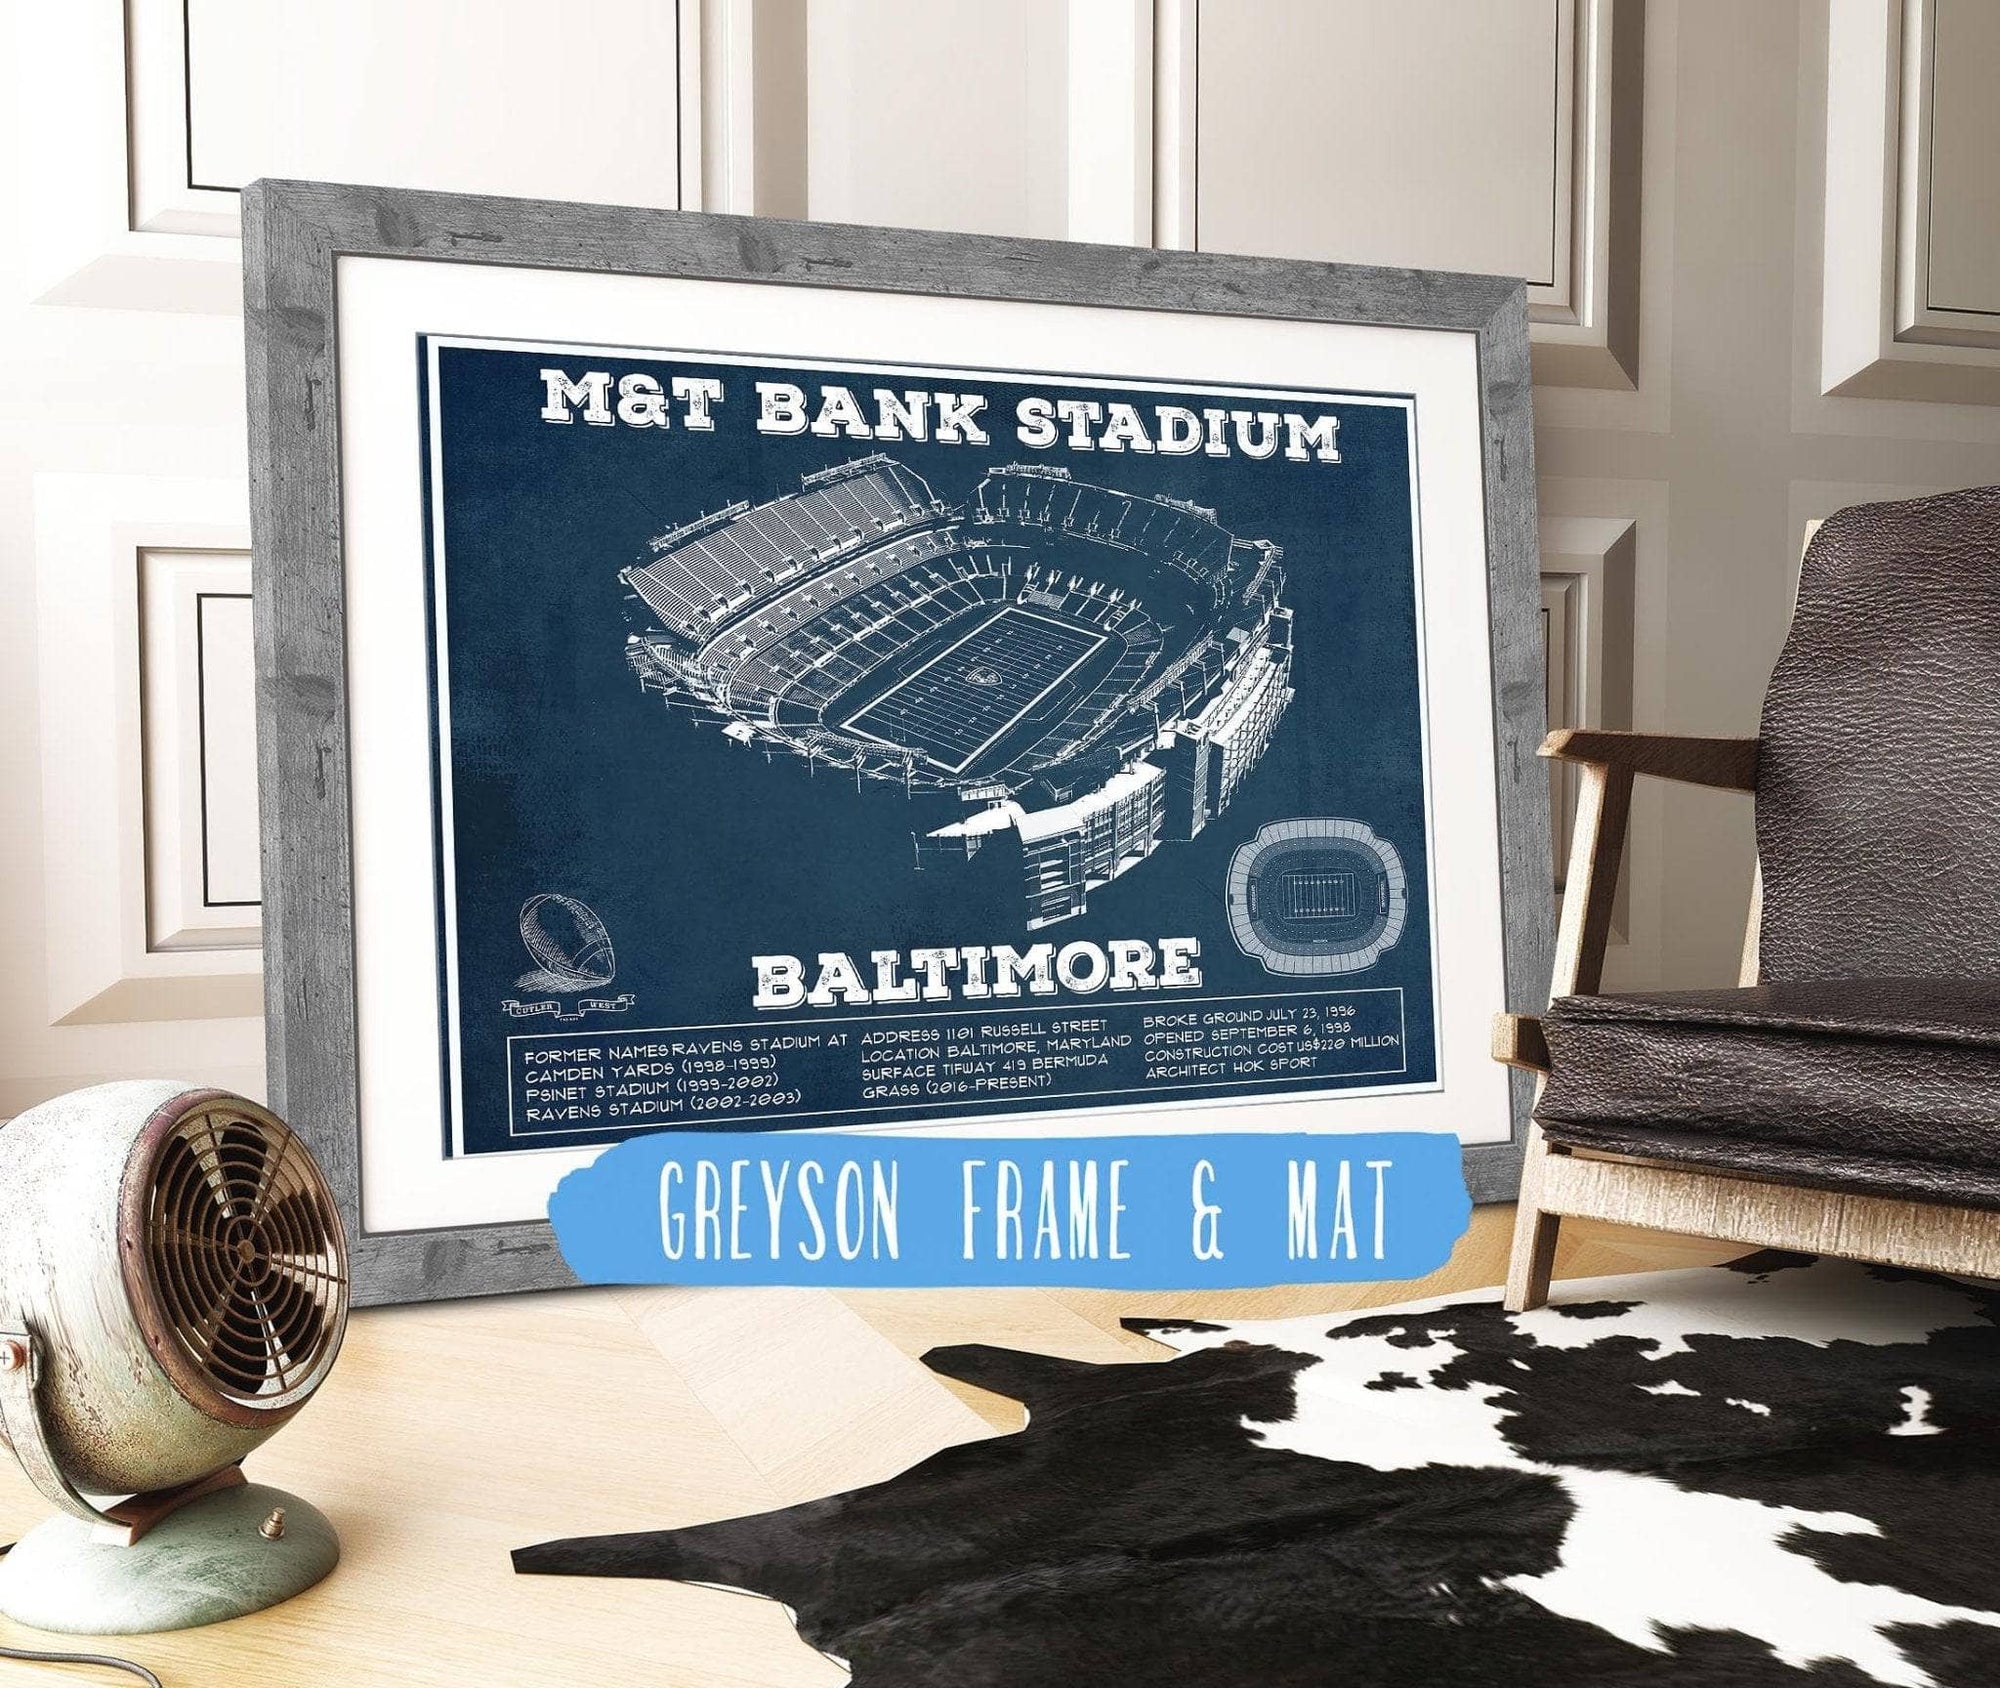 Cutler West Pro Football Collection 14" x 11" / Greyson Frame & Mat Baltimore Ravens - M&T Bank Stadium - Vintage Football Print 635803678-TOP